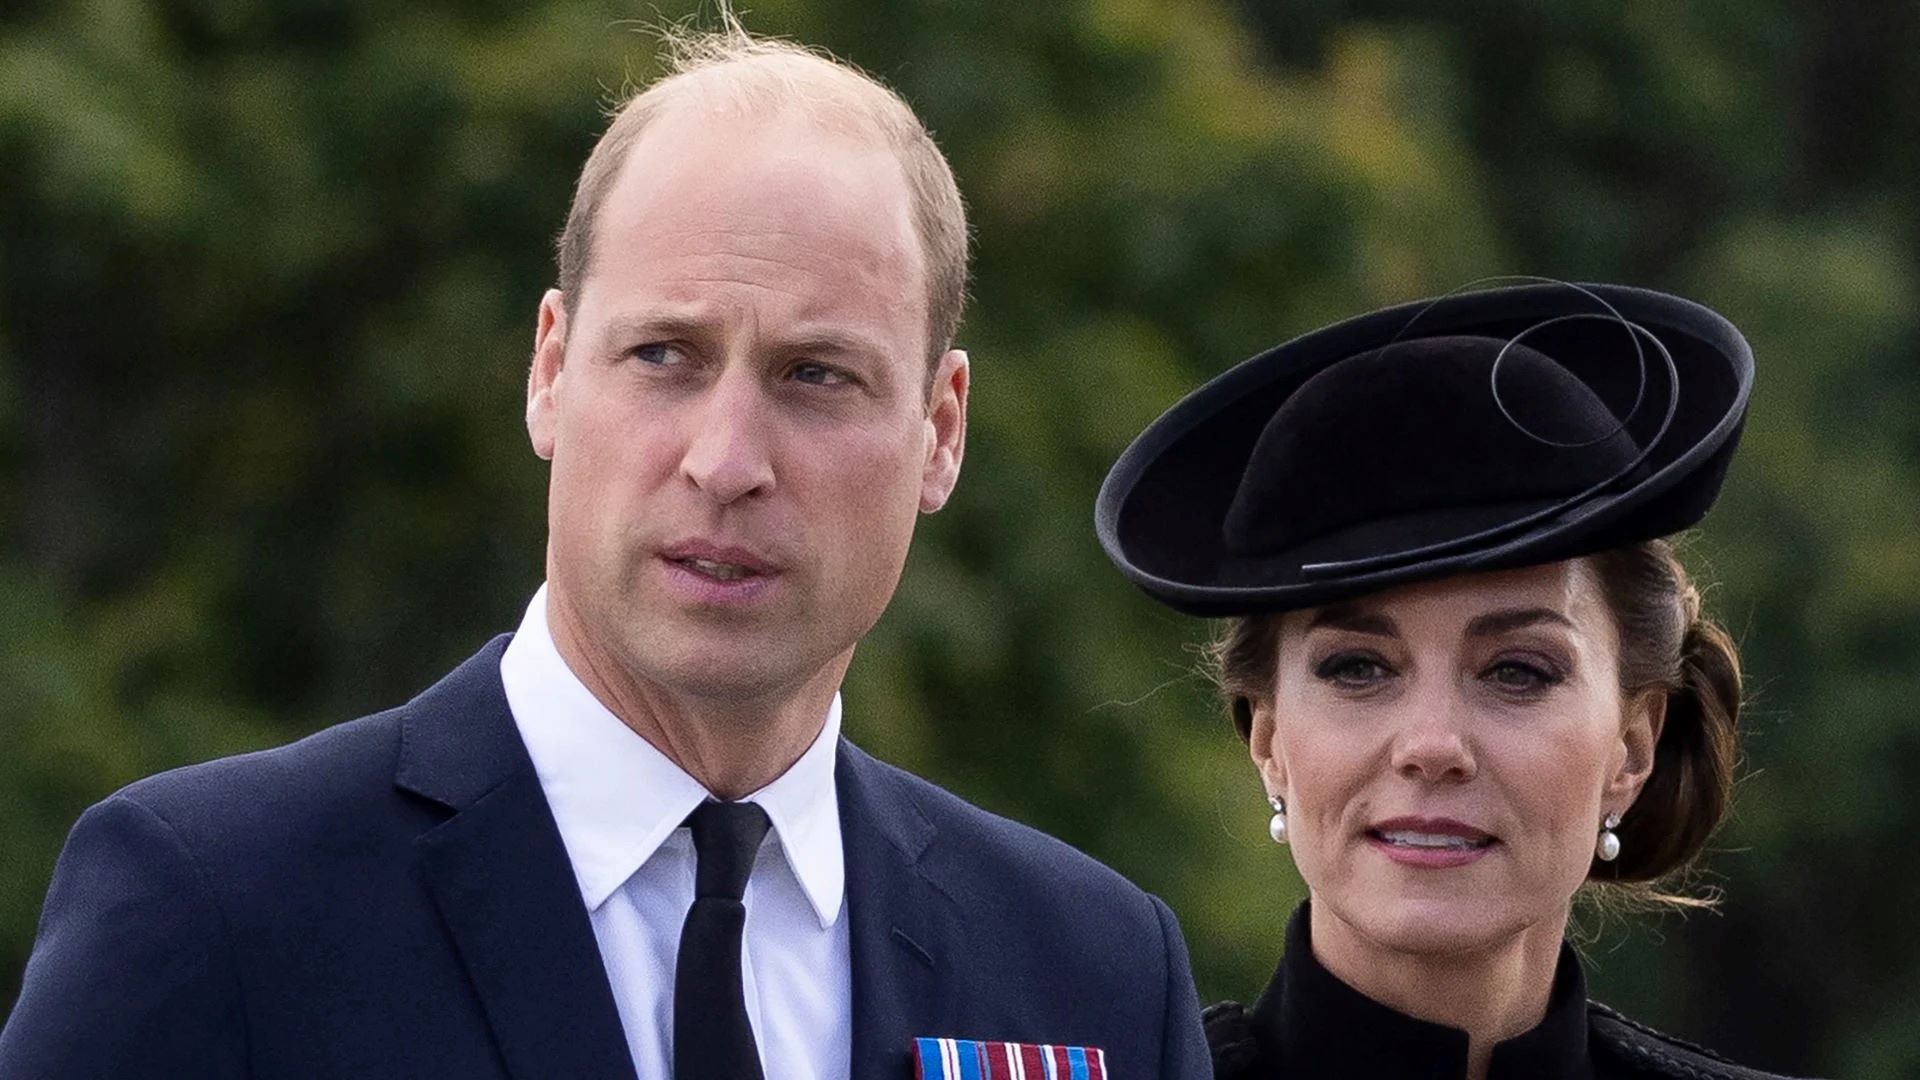 Prince William Visits Kate Middleton In Hospital